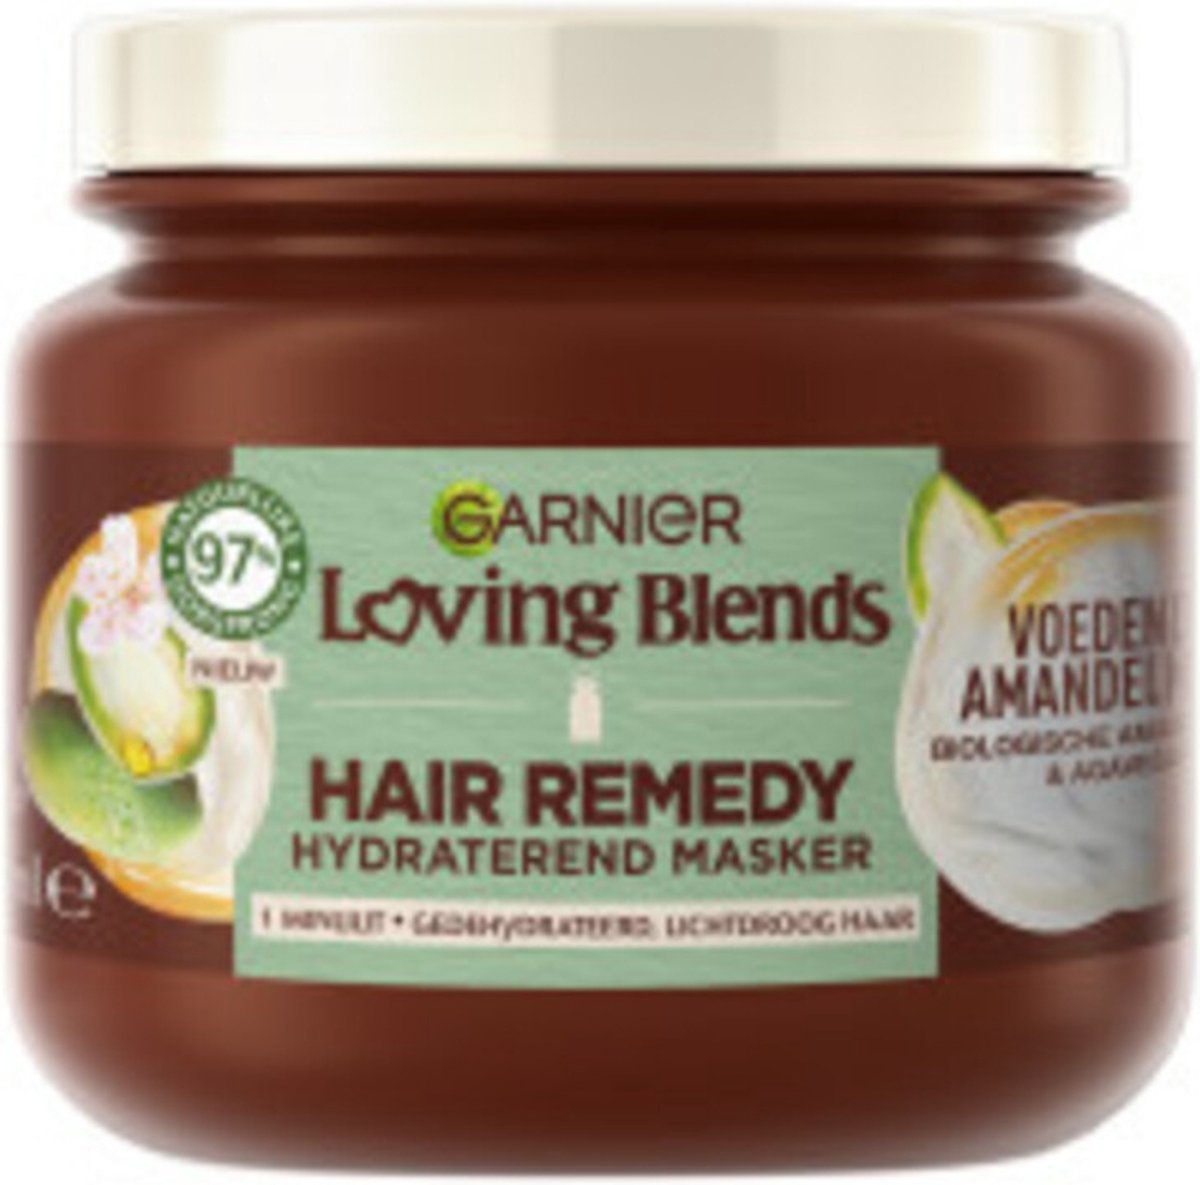 Garnier Loving Blends Hair Remedy Masker - Voedende Amandelmelk - 340 ml